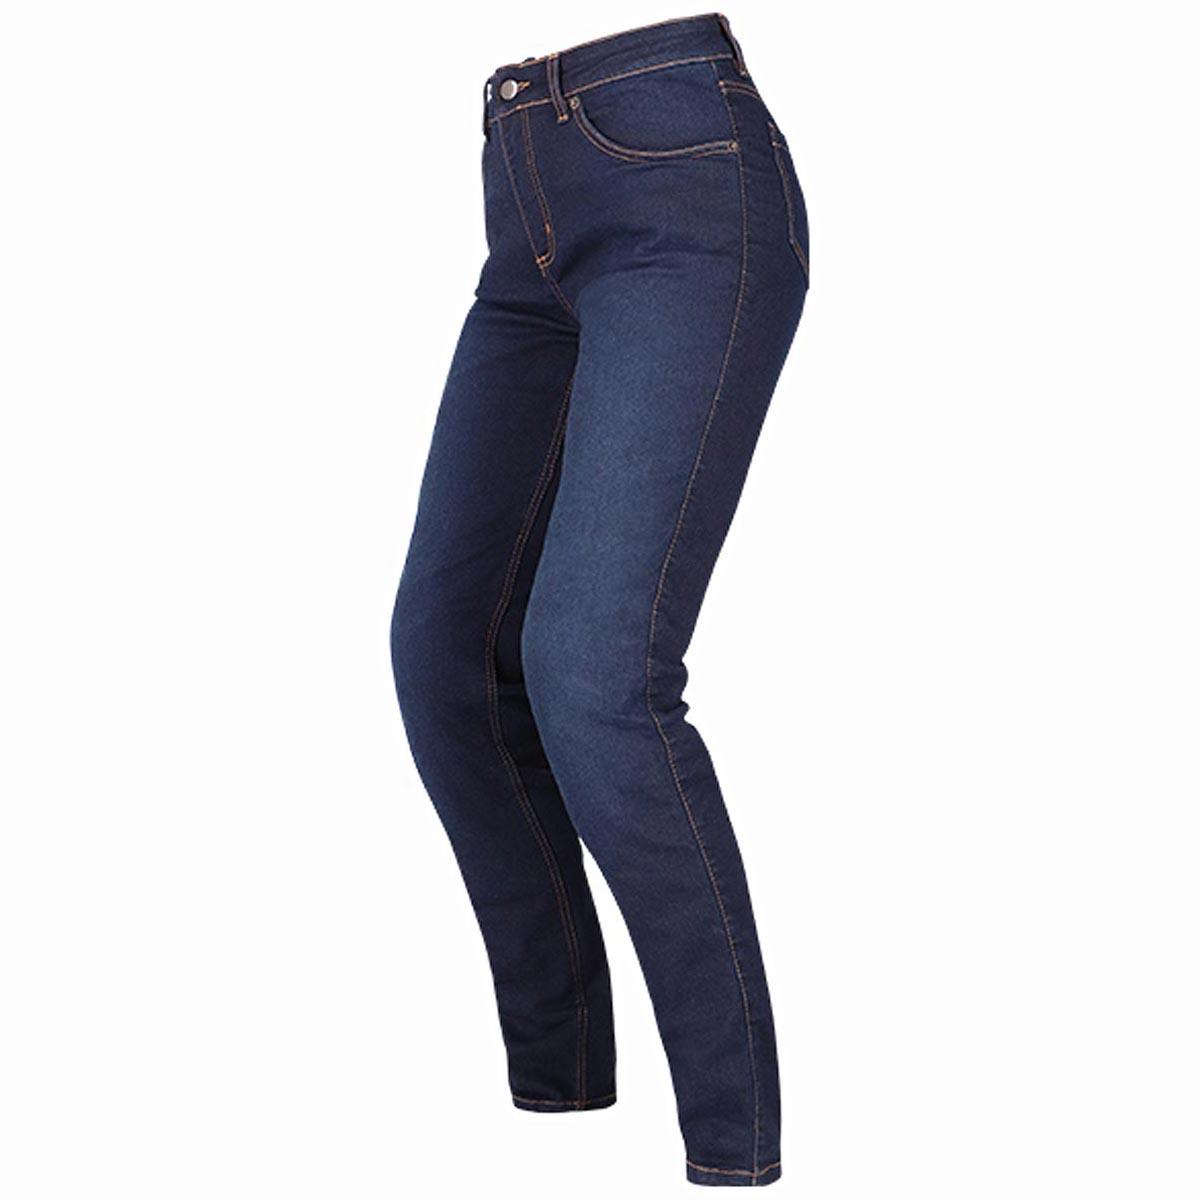 Richa Original 2 Slim Cut Jeans Ladies 32in Leg  - Armoured Jeans